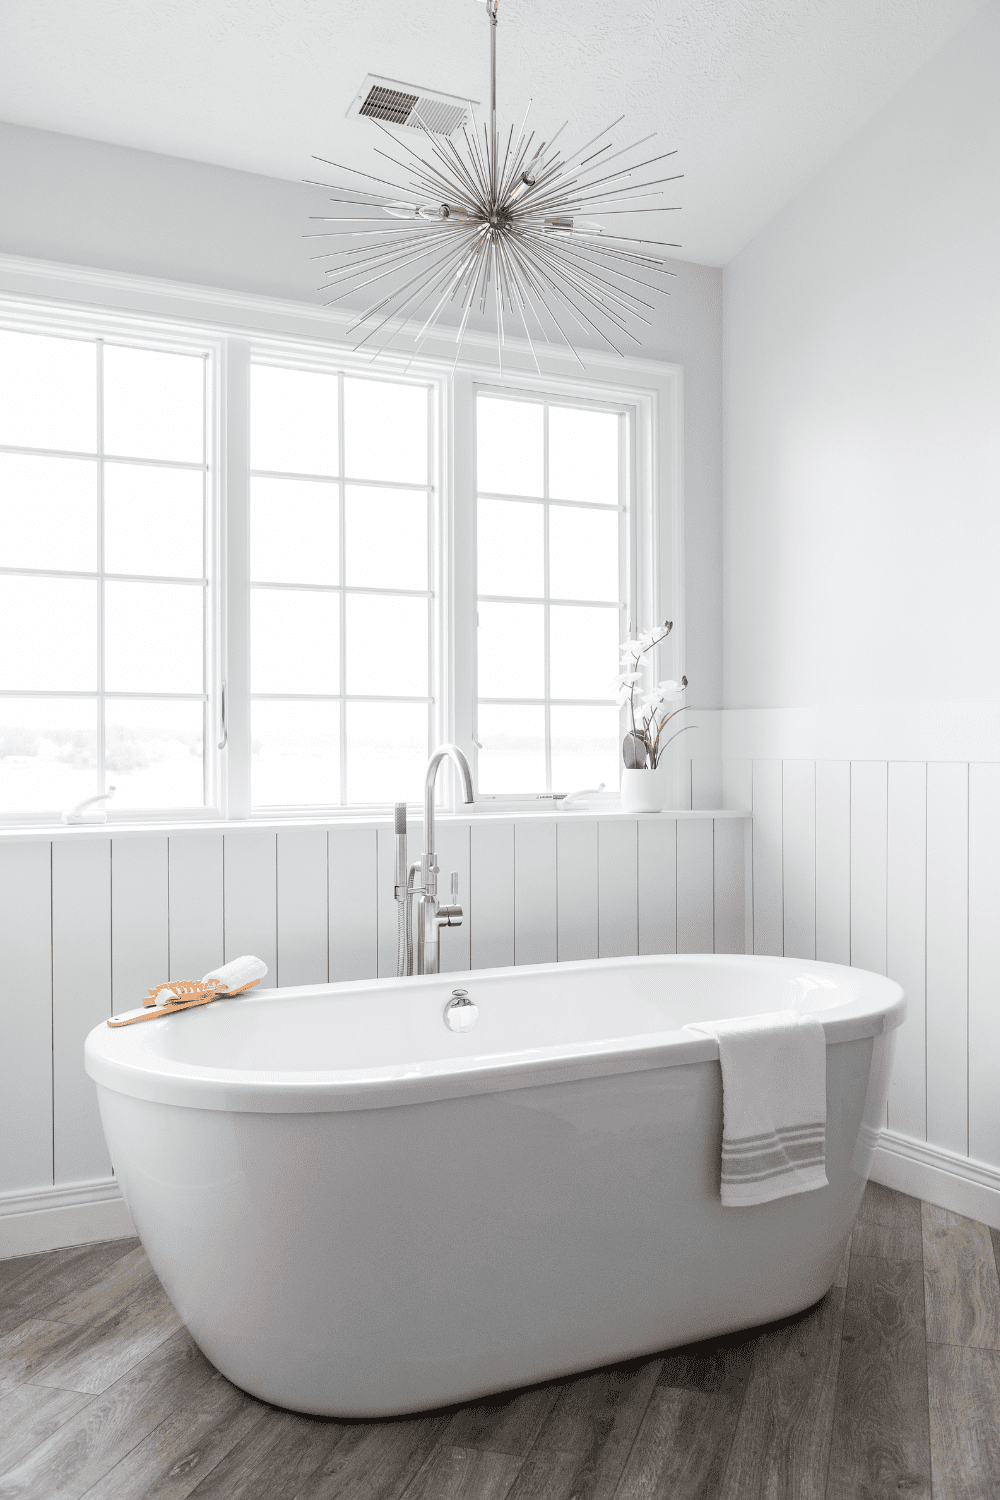 Nicholas Design Build | A white bathtub in a master bathroom with wood floors.